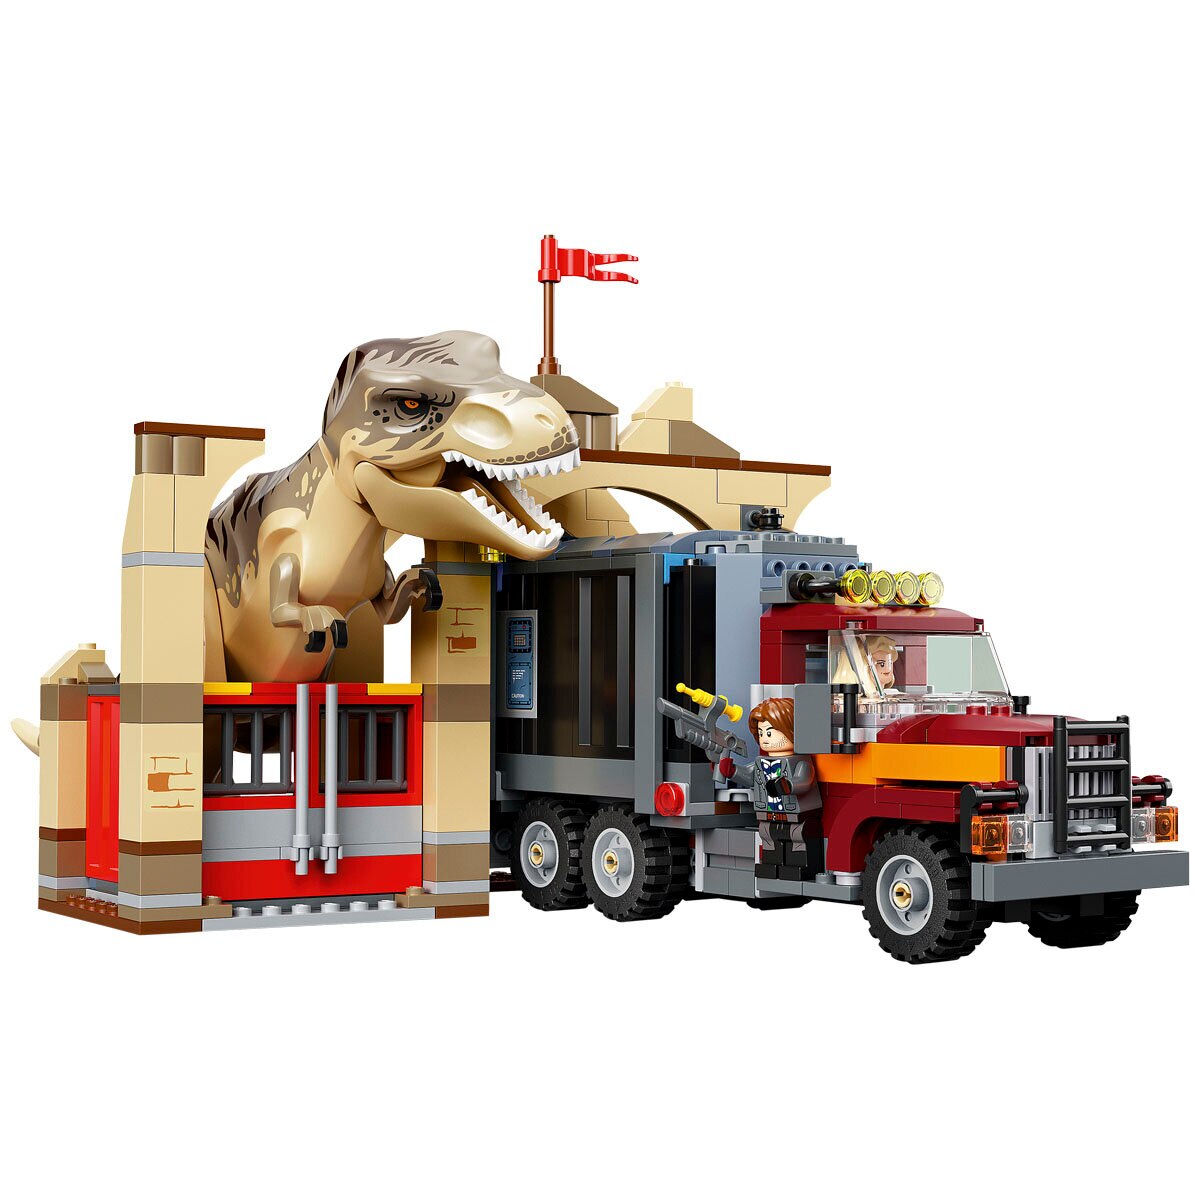 LEGO Jurassic World T. rex and Atrociraptor Dinosaur Breakout 76948